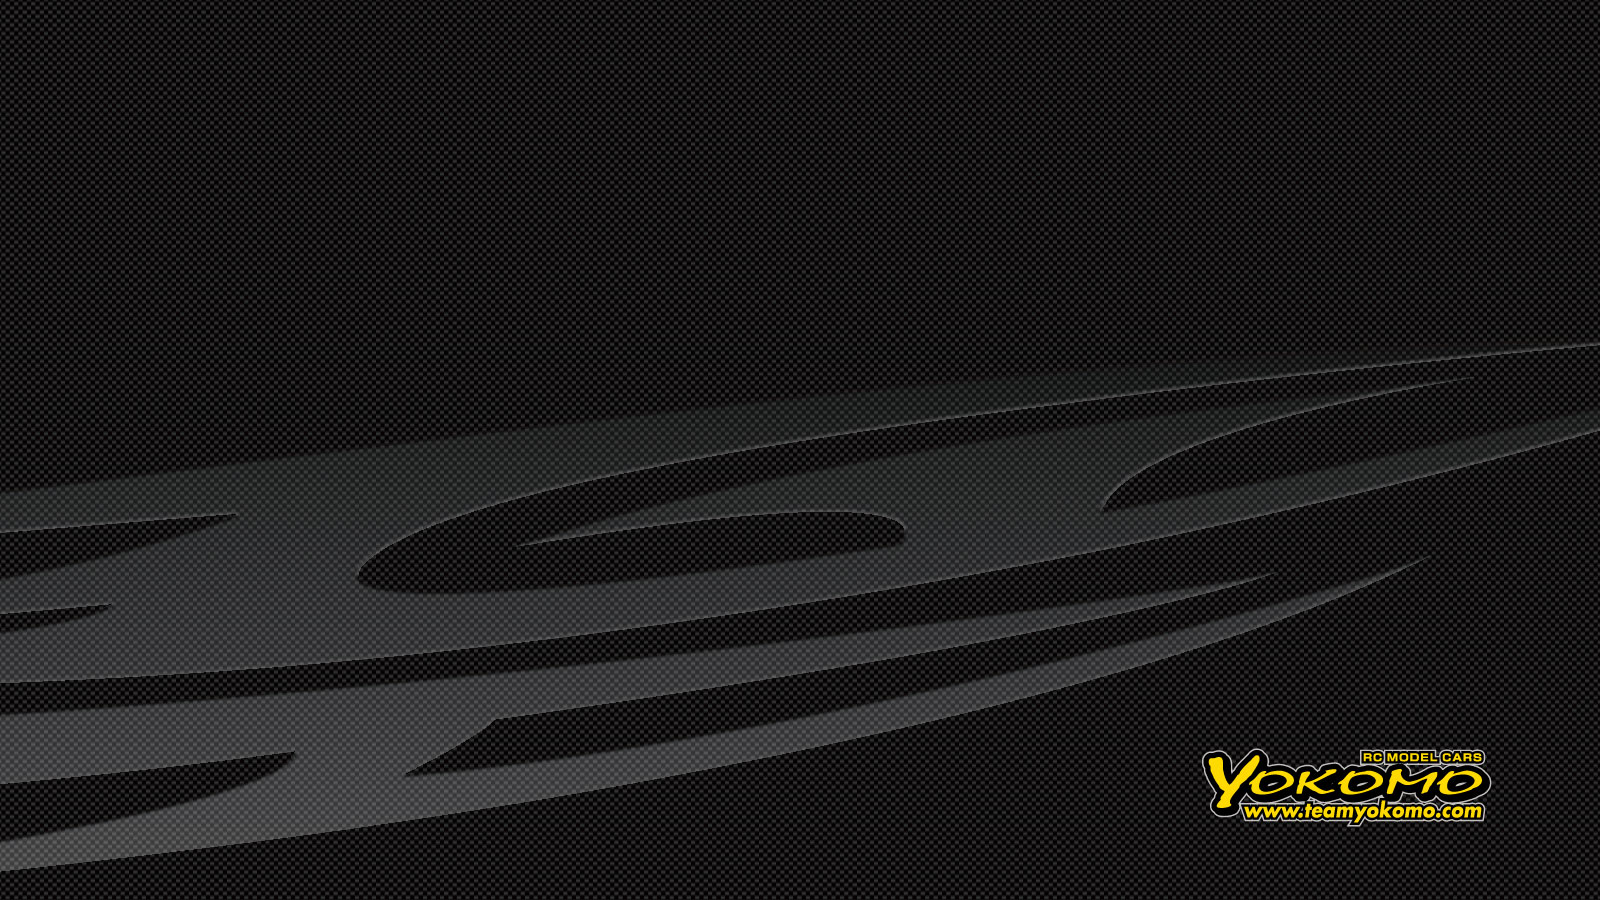 Download Rcカーのヨコモ Yokomo Rc Car Official Site